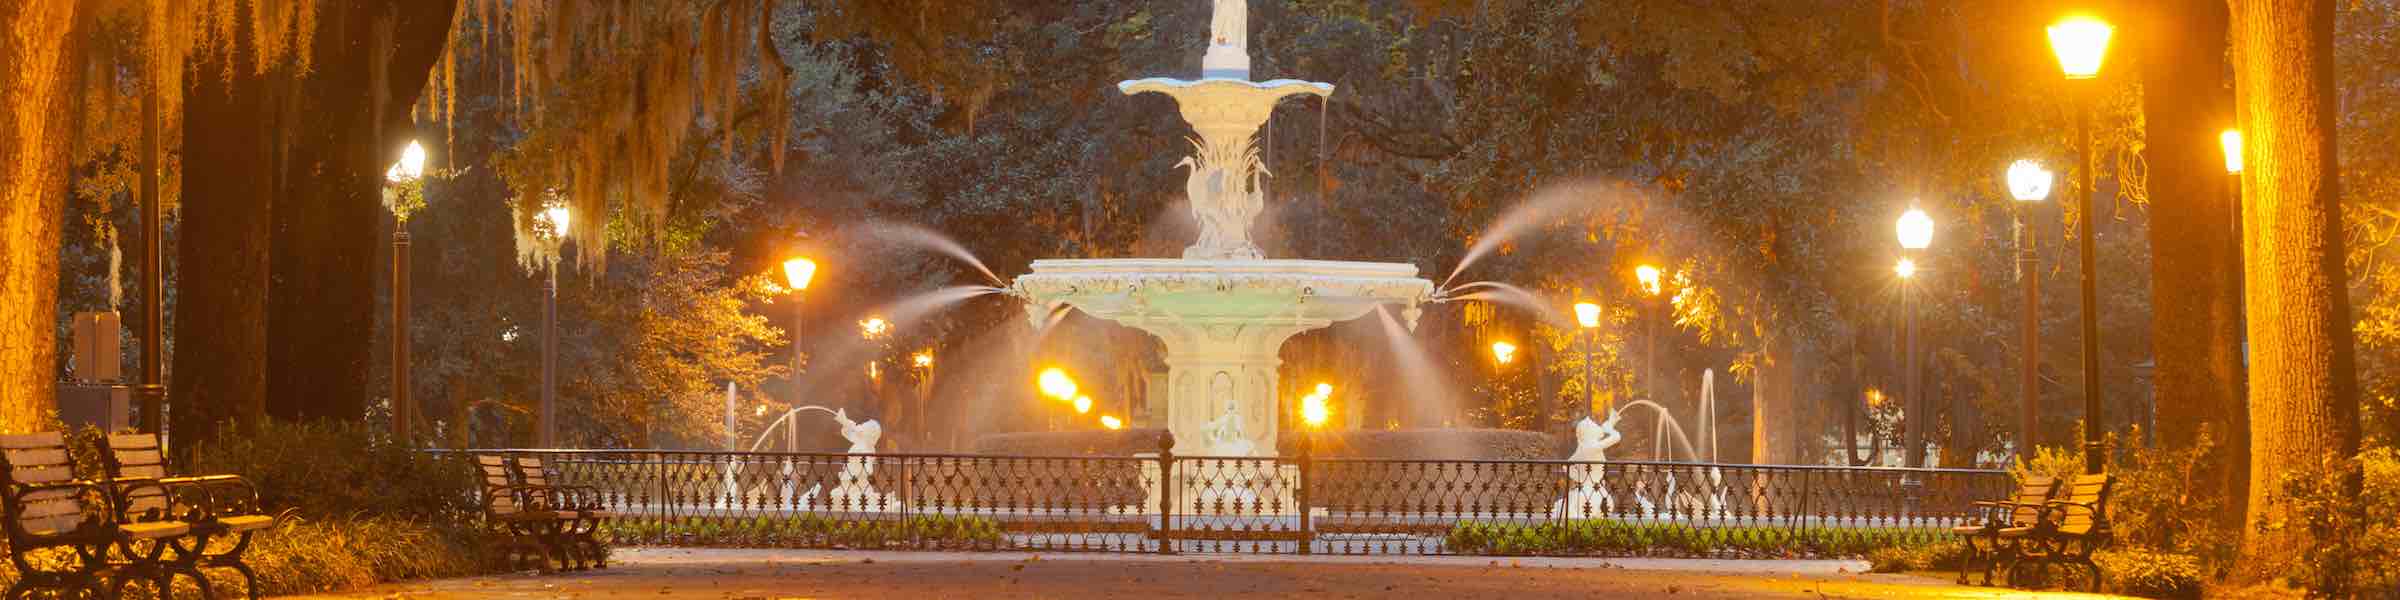 The fountain in Forsyth Park, Savannah, at night.